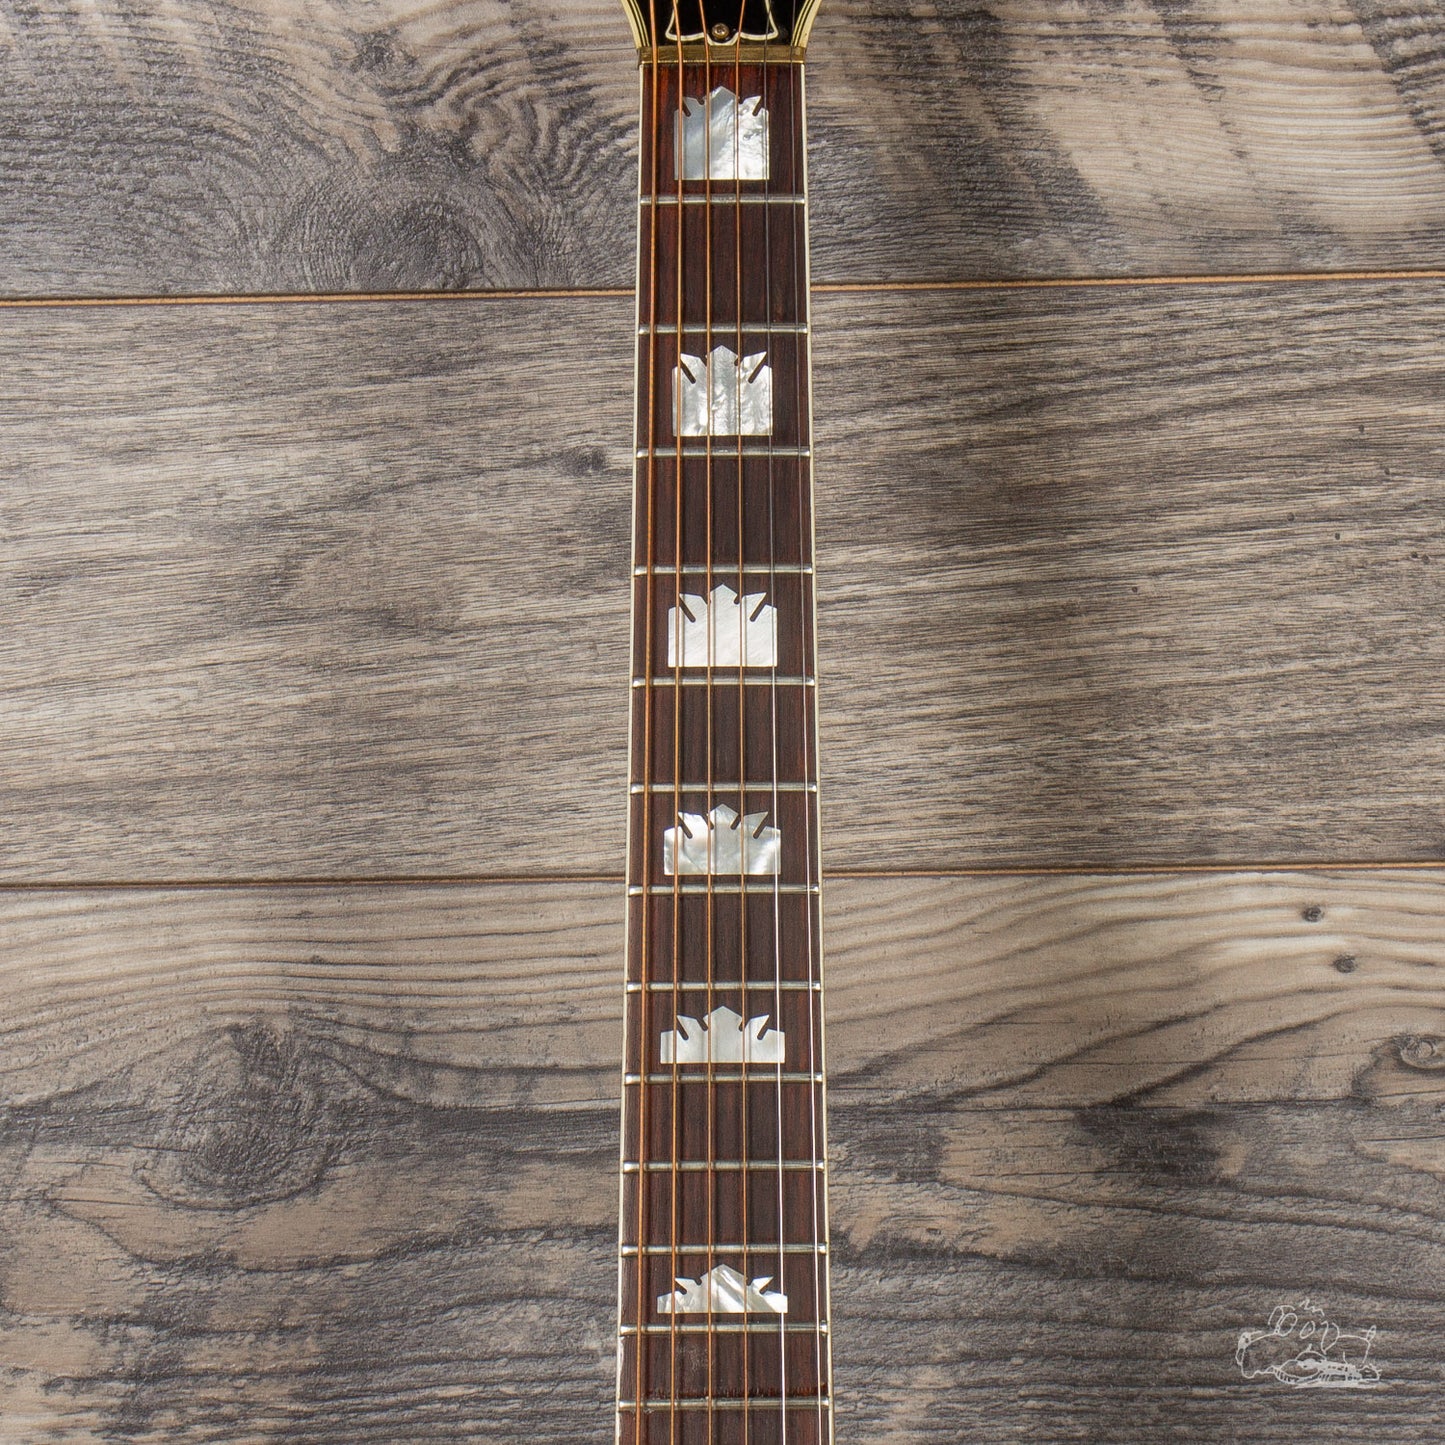 1979 Gibson J-200 Artist - Ebony